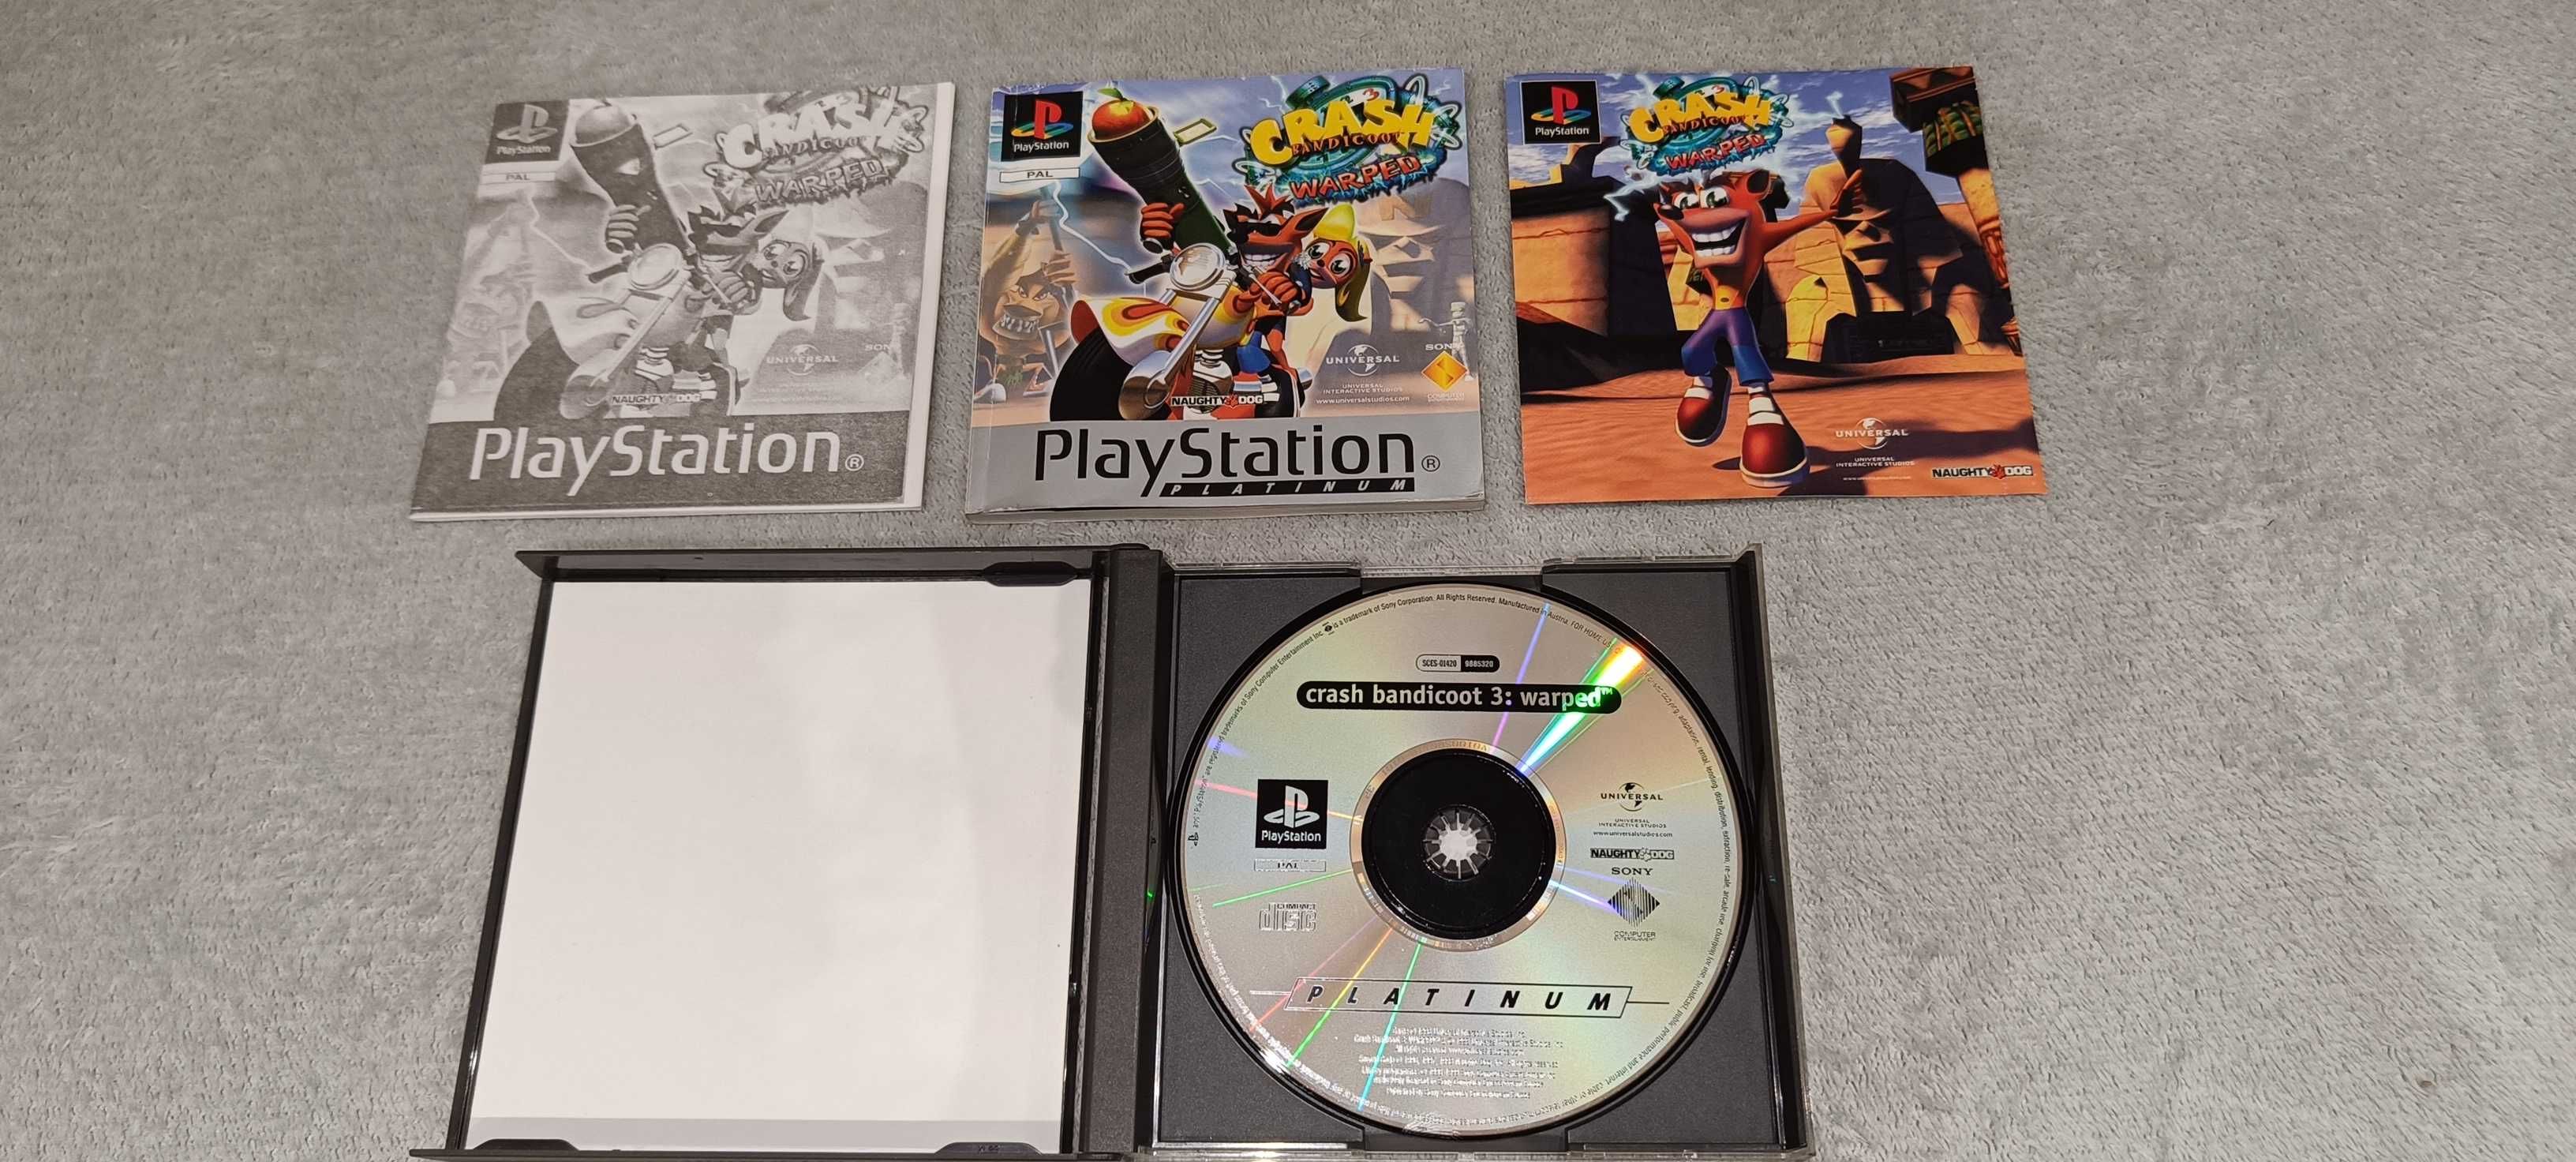 Gra Crash Bandicoot 3: Warped Sony PlayStation (PSX,PS1,PS One)